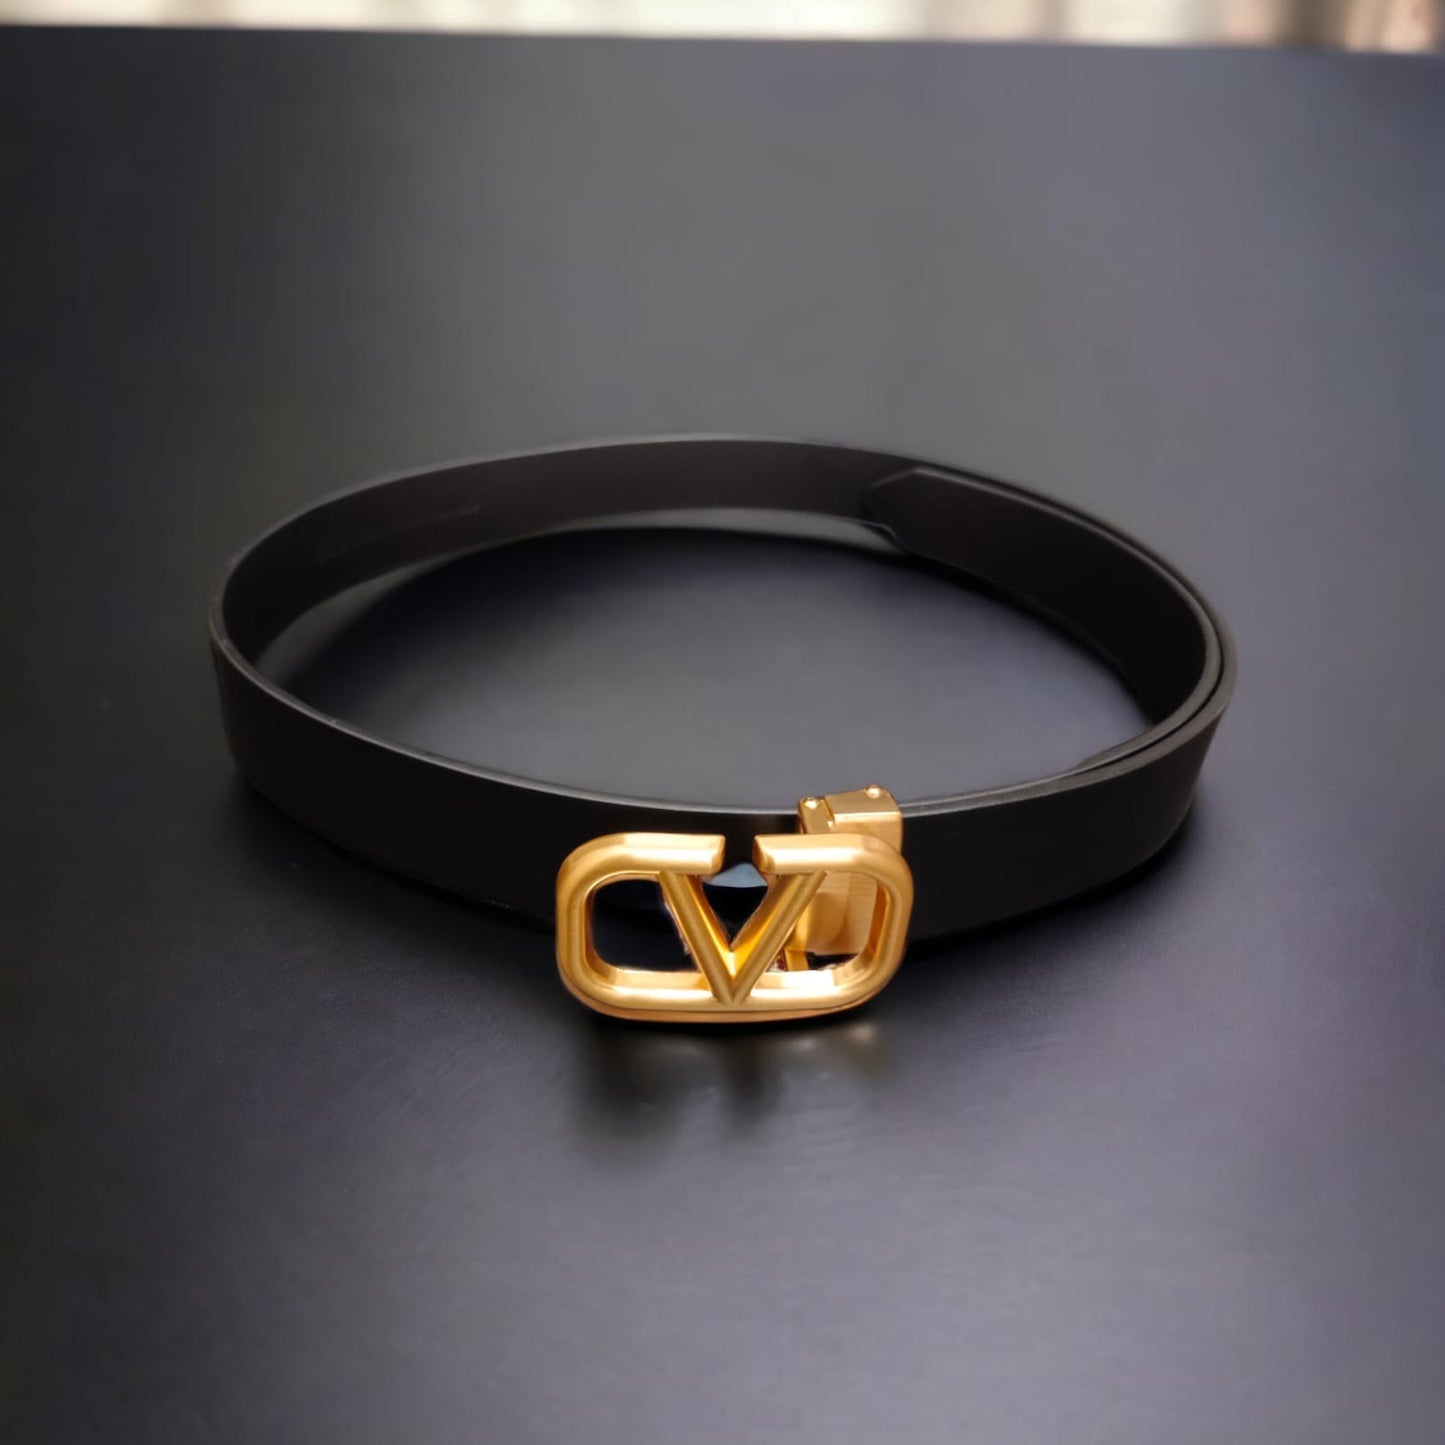 Jack Marc Men's Fashion Black Gold Leather Belt for Office & Casual Wear